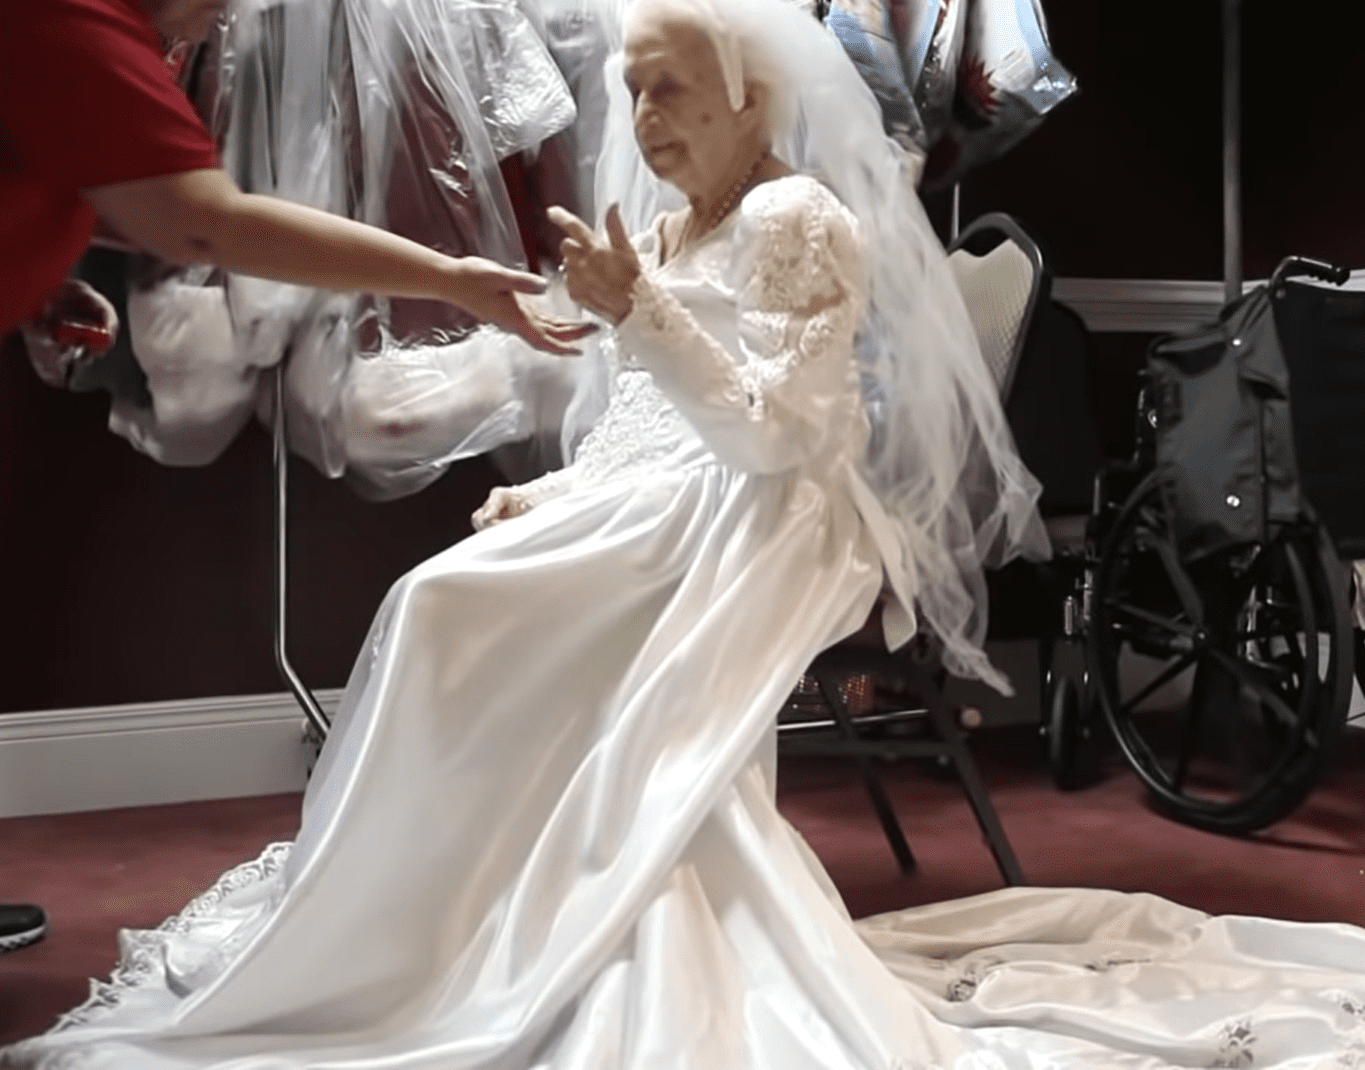 Dana Stauss sitting in her wedding dress.┃Source: youtube.com/AARP